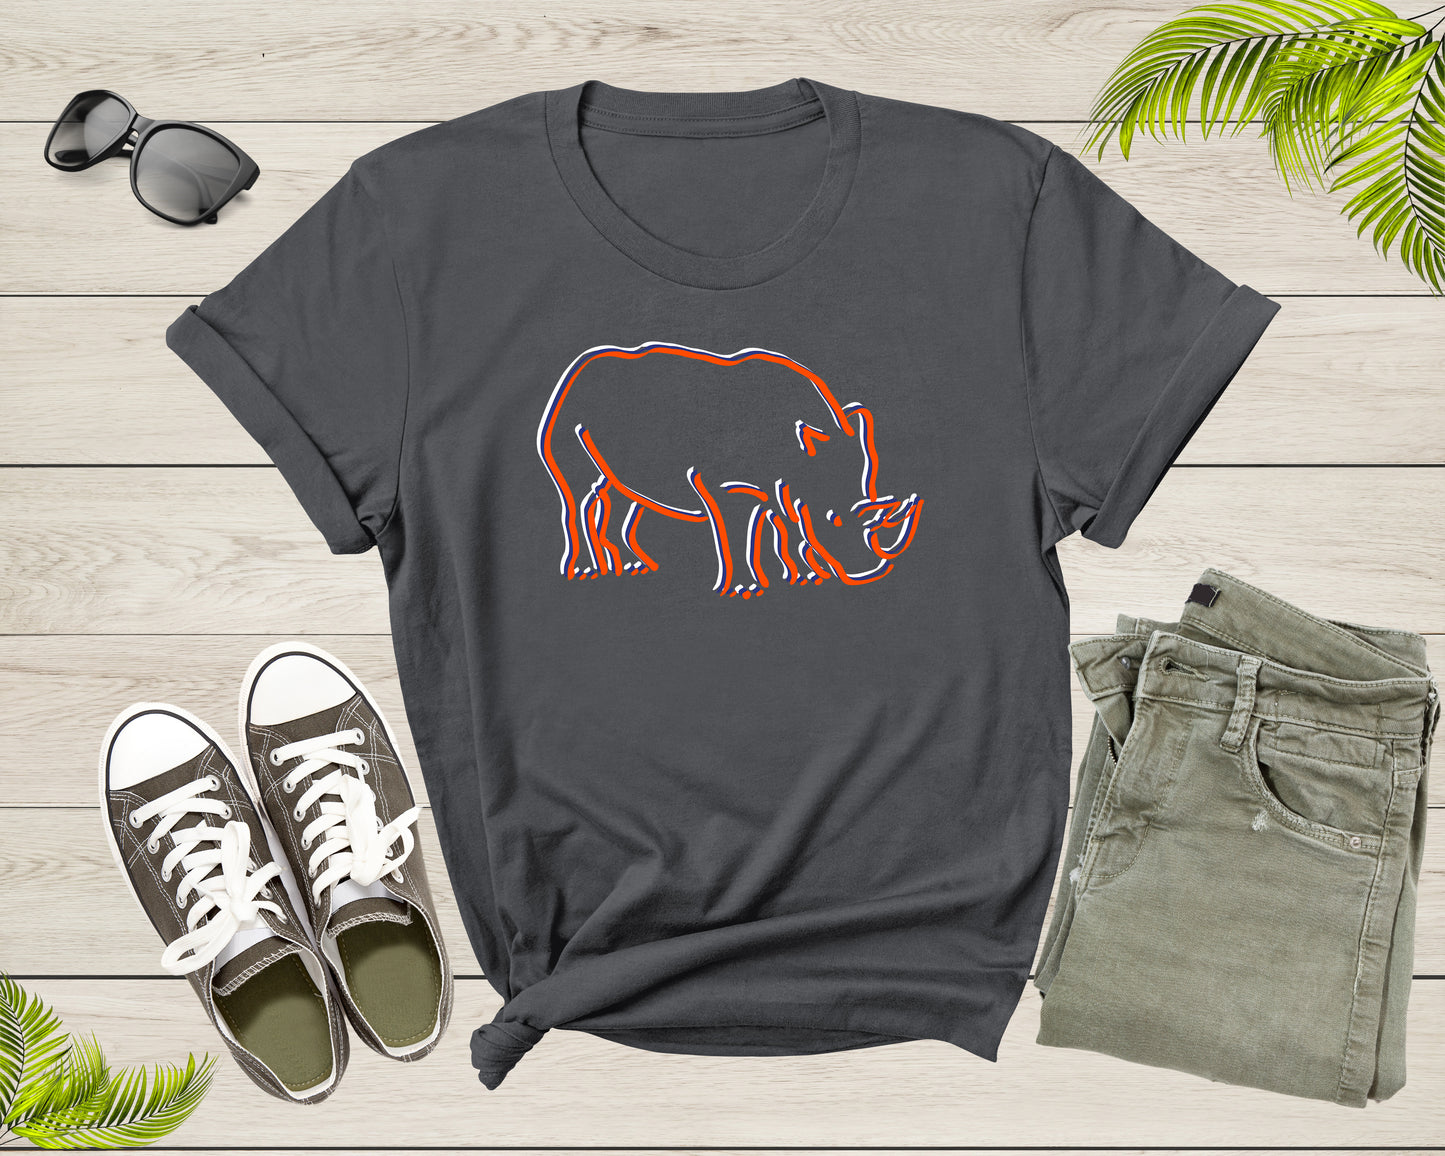 Colorful Rhinoceros Hippopotamus Wild Hippo Animal Wildlife T-Shirt Rhino Lover Gift Graphic T Shirt for Men Women Boys Girls Teens Tshirt